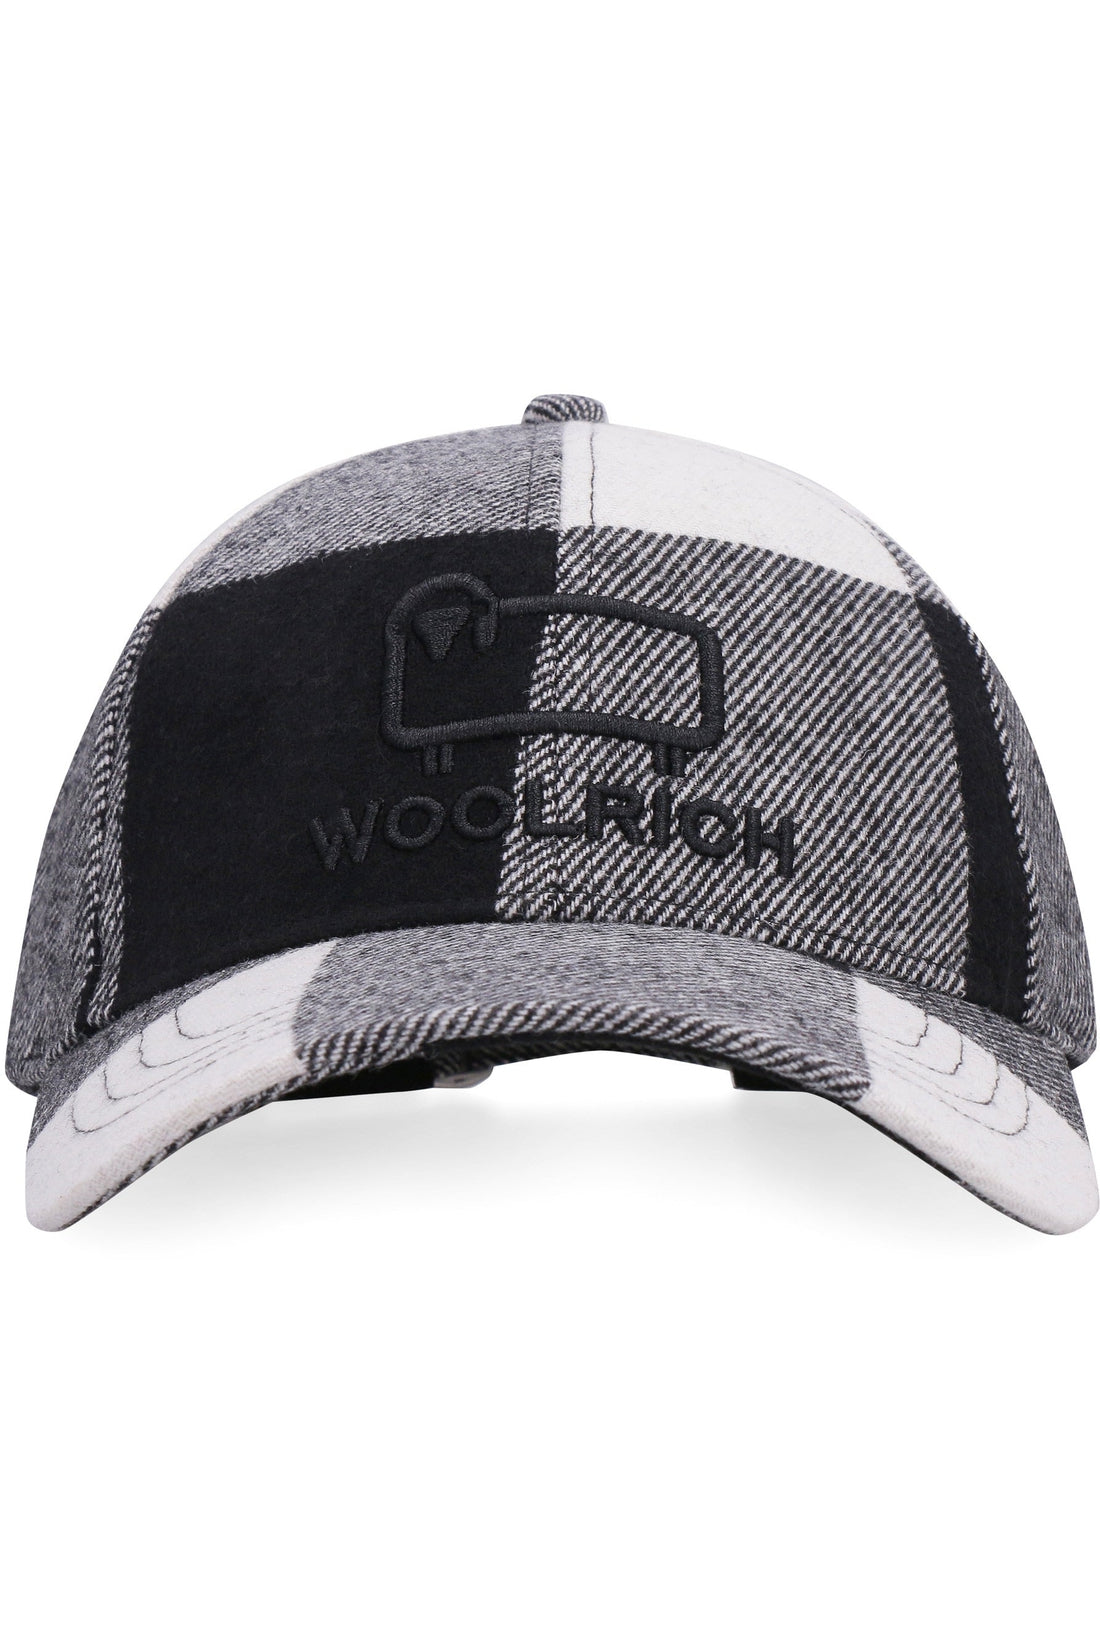 Woolrich-OUTLET-SALE-Logo baseball cap-ARCHIVIST